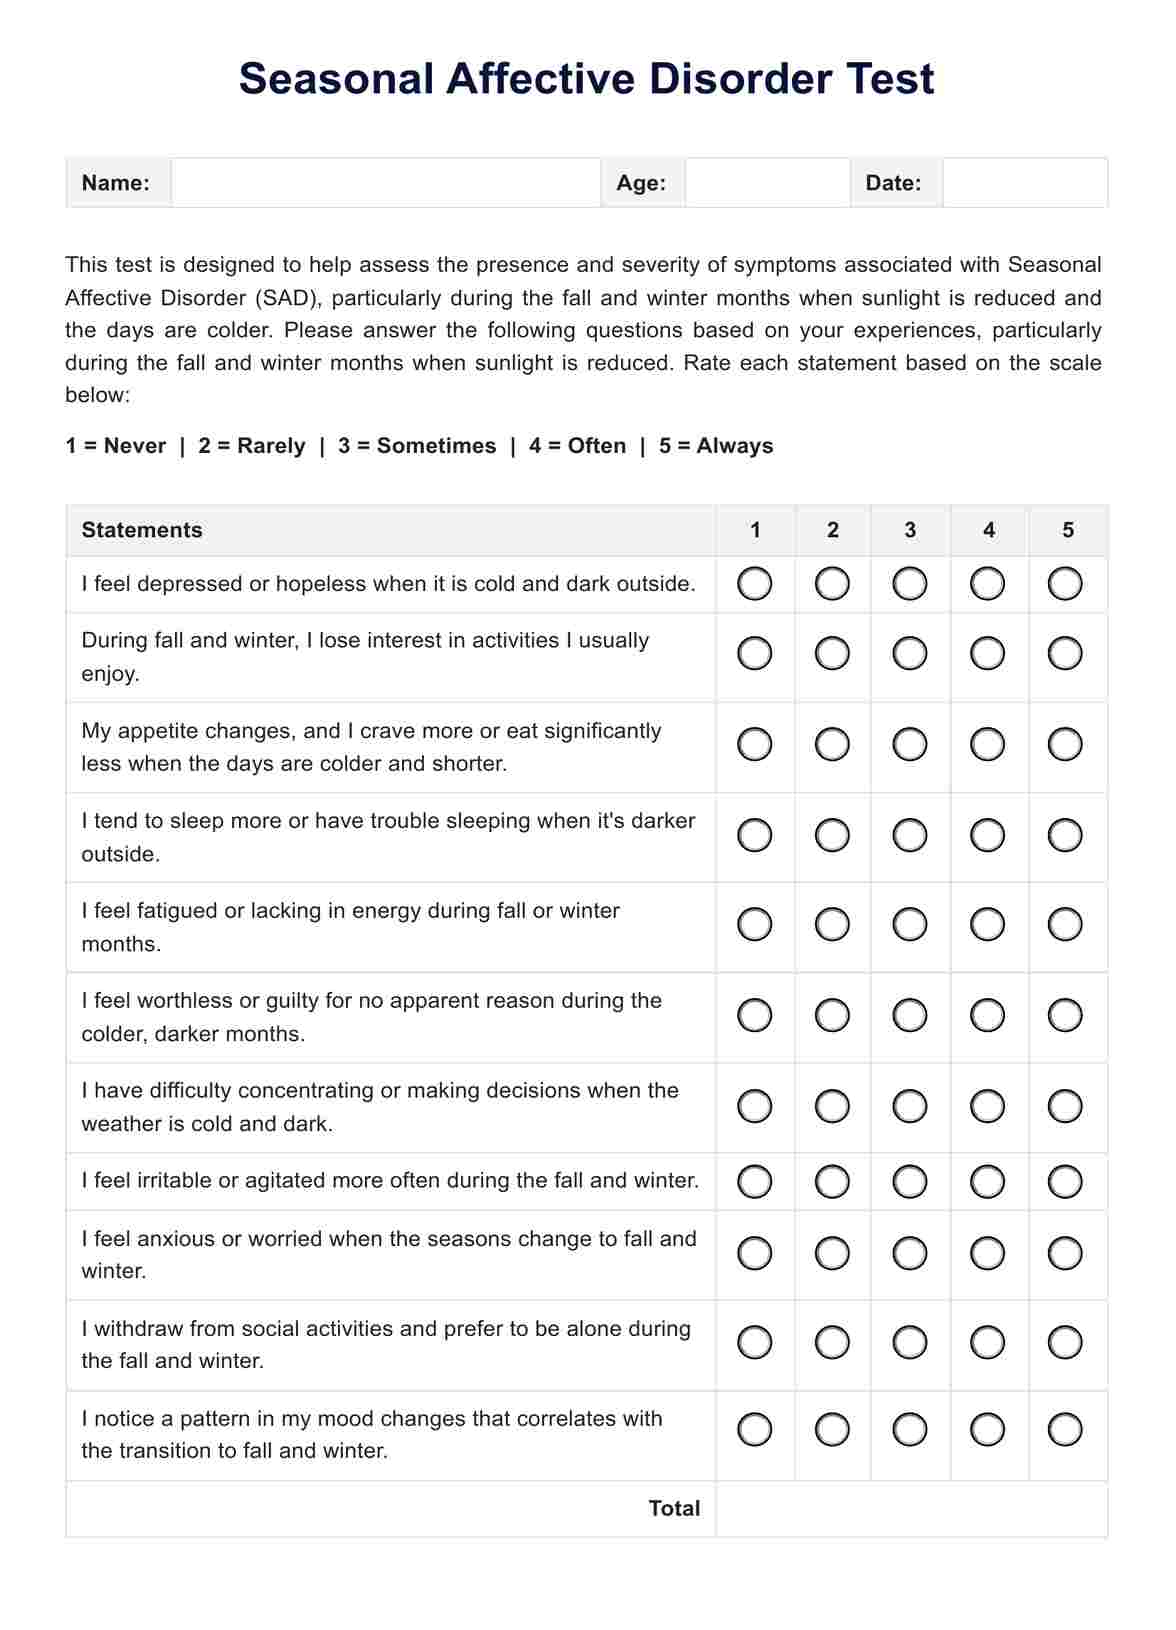 Seasonal Affective Disorder Test PDF Example